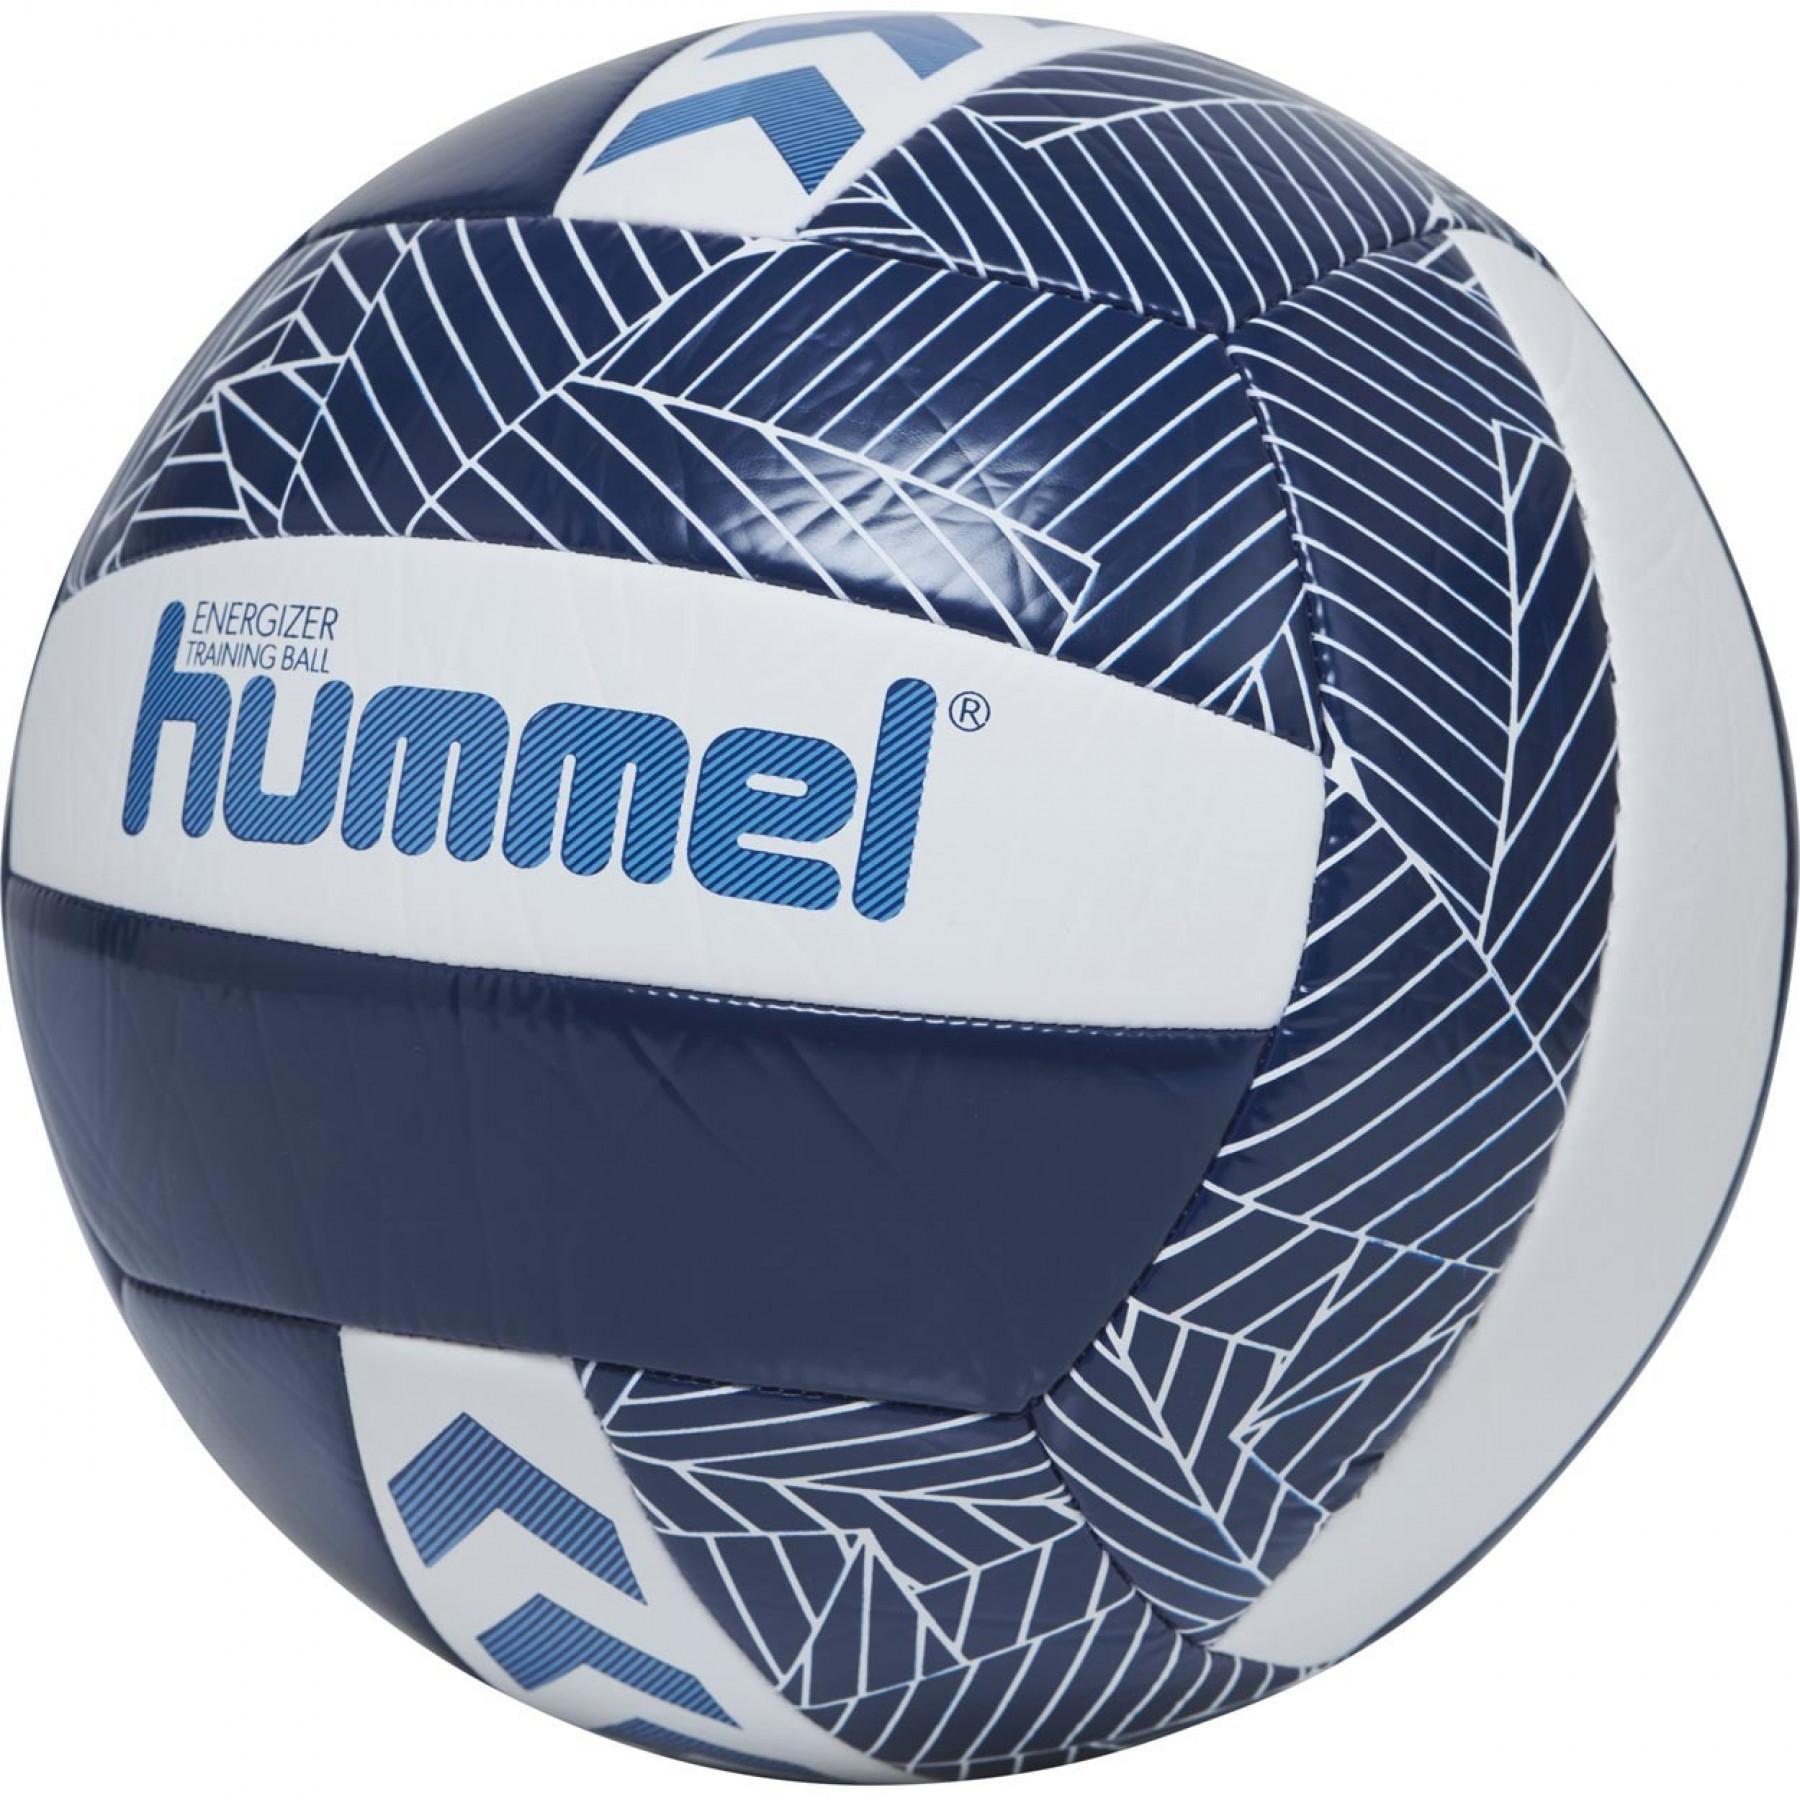 Juego de 5 balones de voleibol Hummel Energizer [Taille5]